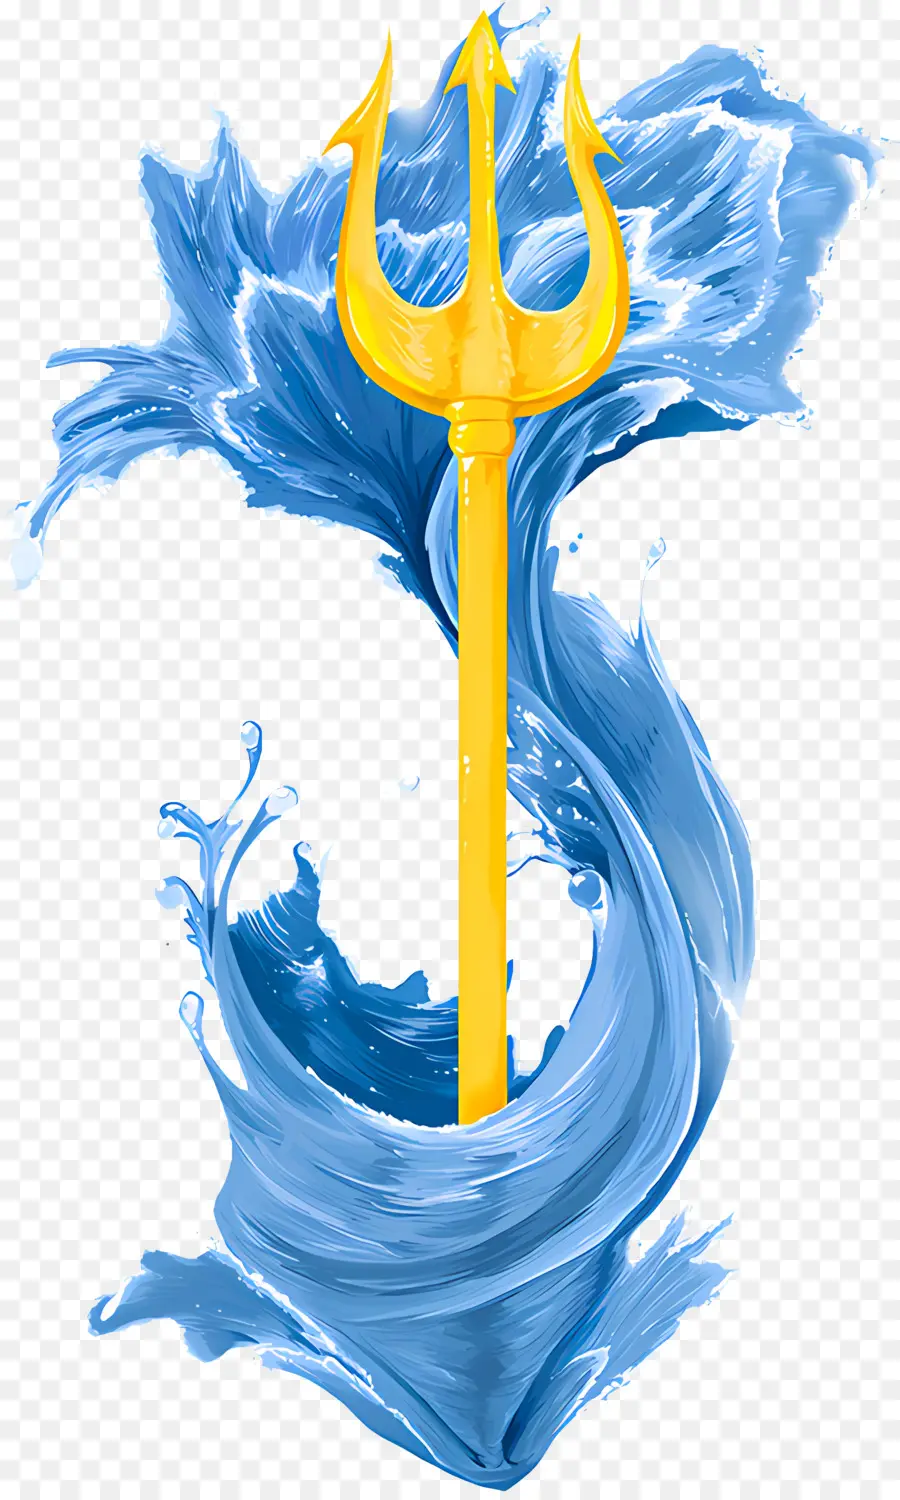 Antike griechische Poseidon Sea God Trident Metal - Poseidon taucht aus Welle mit Trident, Photoshop auf